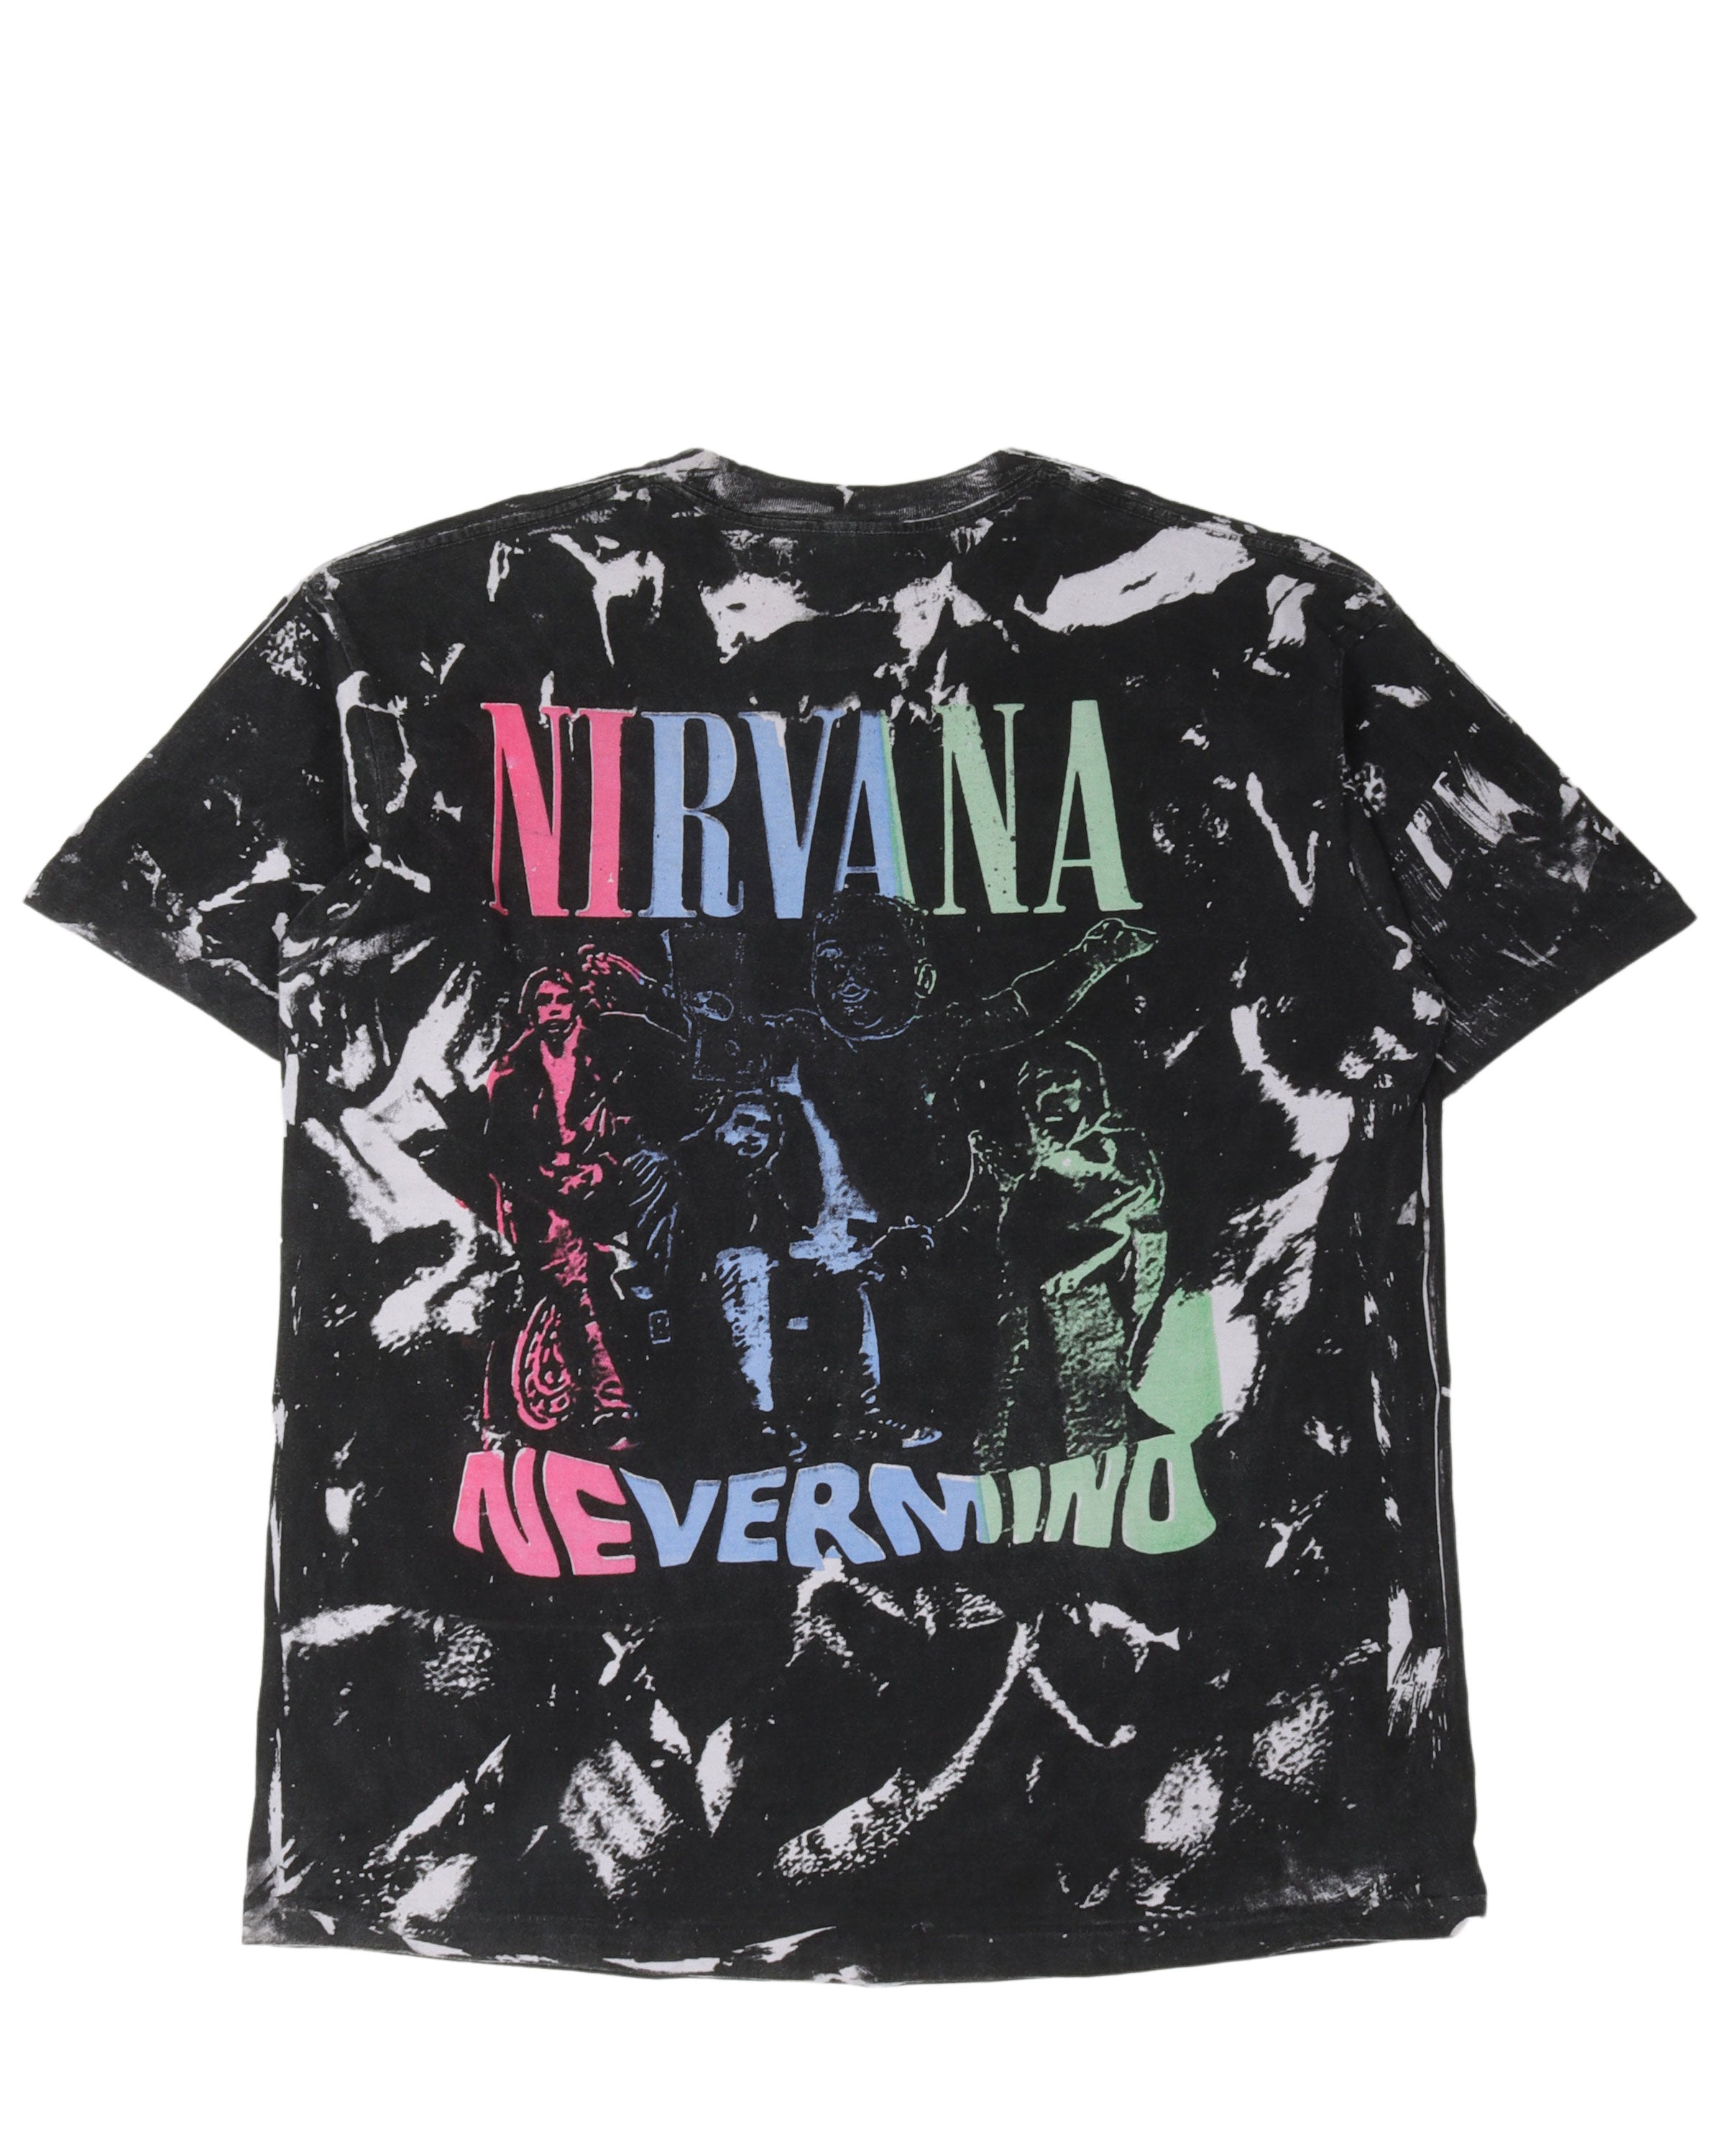 Nirvana "Nevermind" Tie-Dye T-Shirt